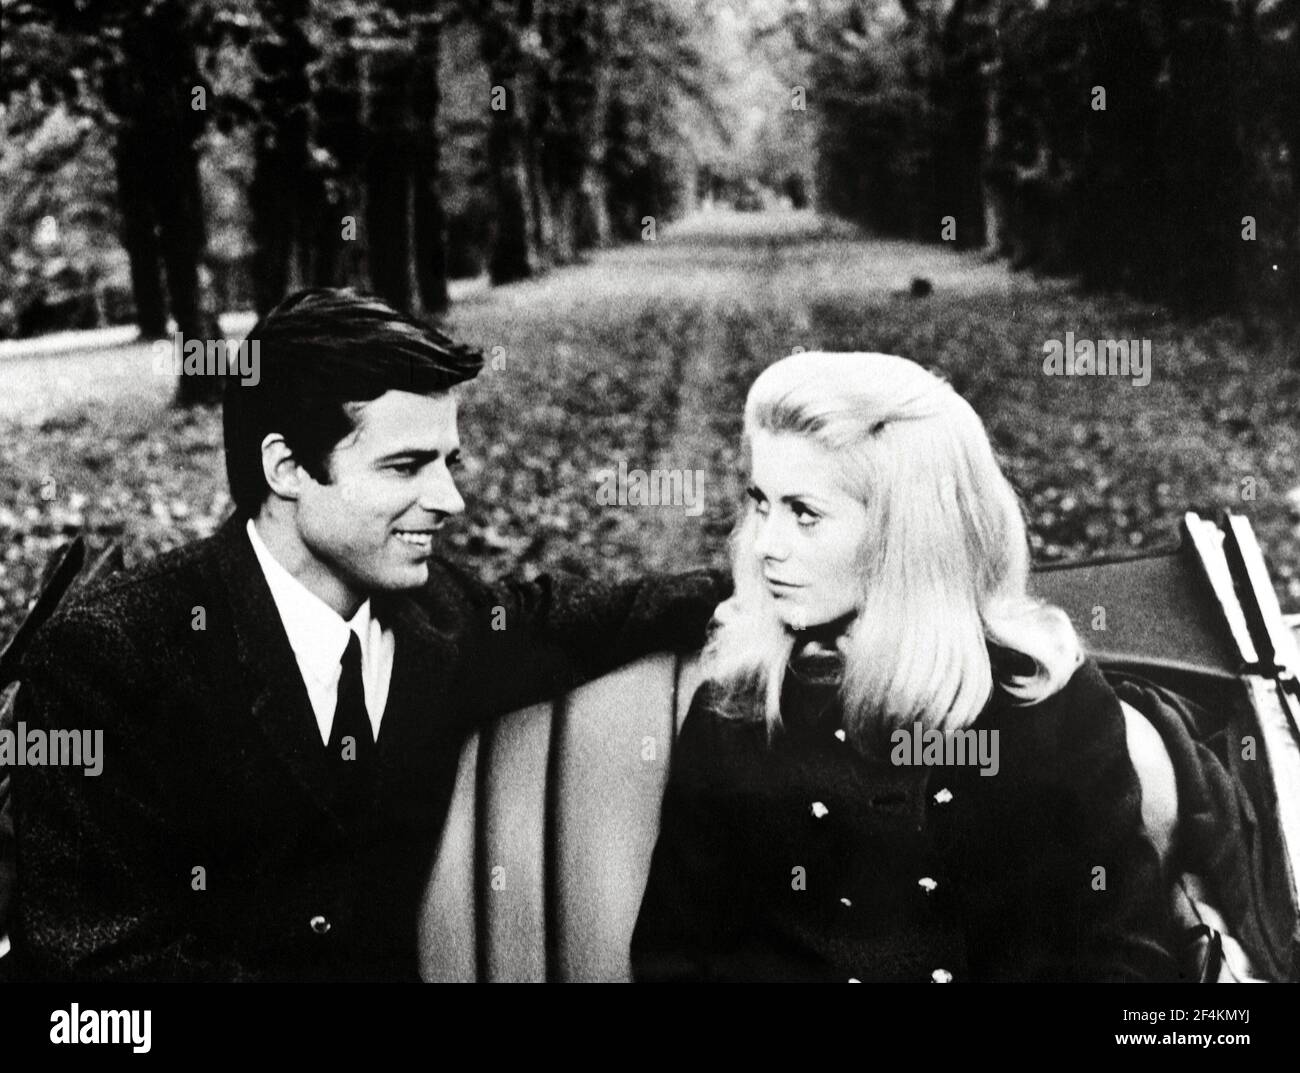 CATHERINE DENEUVE and JEAN SOREL in BELLE DE JOUR (1967), directed by LUIS BUÑUEL. Credit: PARIS FILM/FIVE FILM / Album Stock Photo